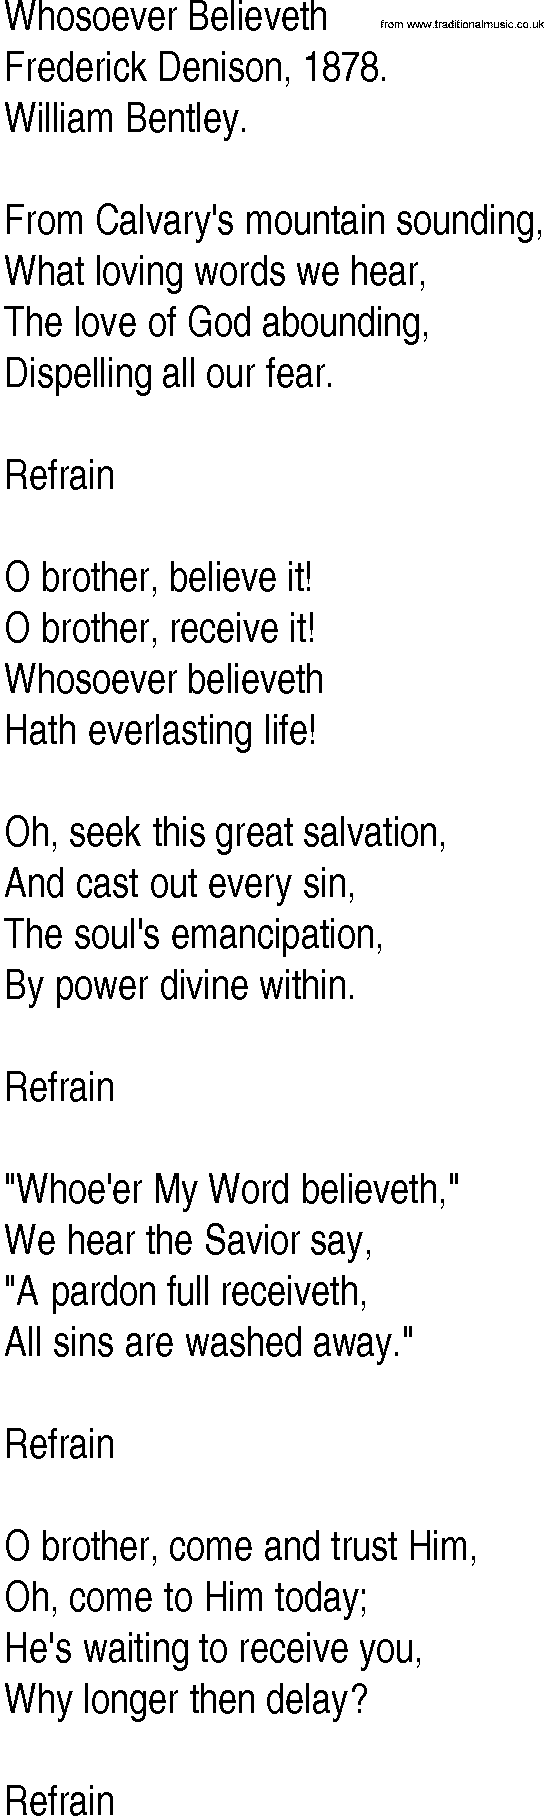 Hymn and Gospel Song: Whosoever Believeth by Frederick Denison lyrics